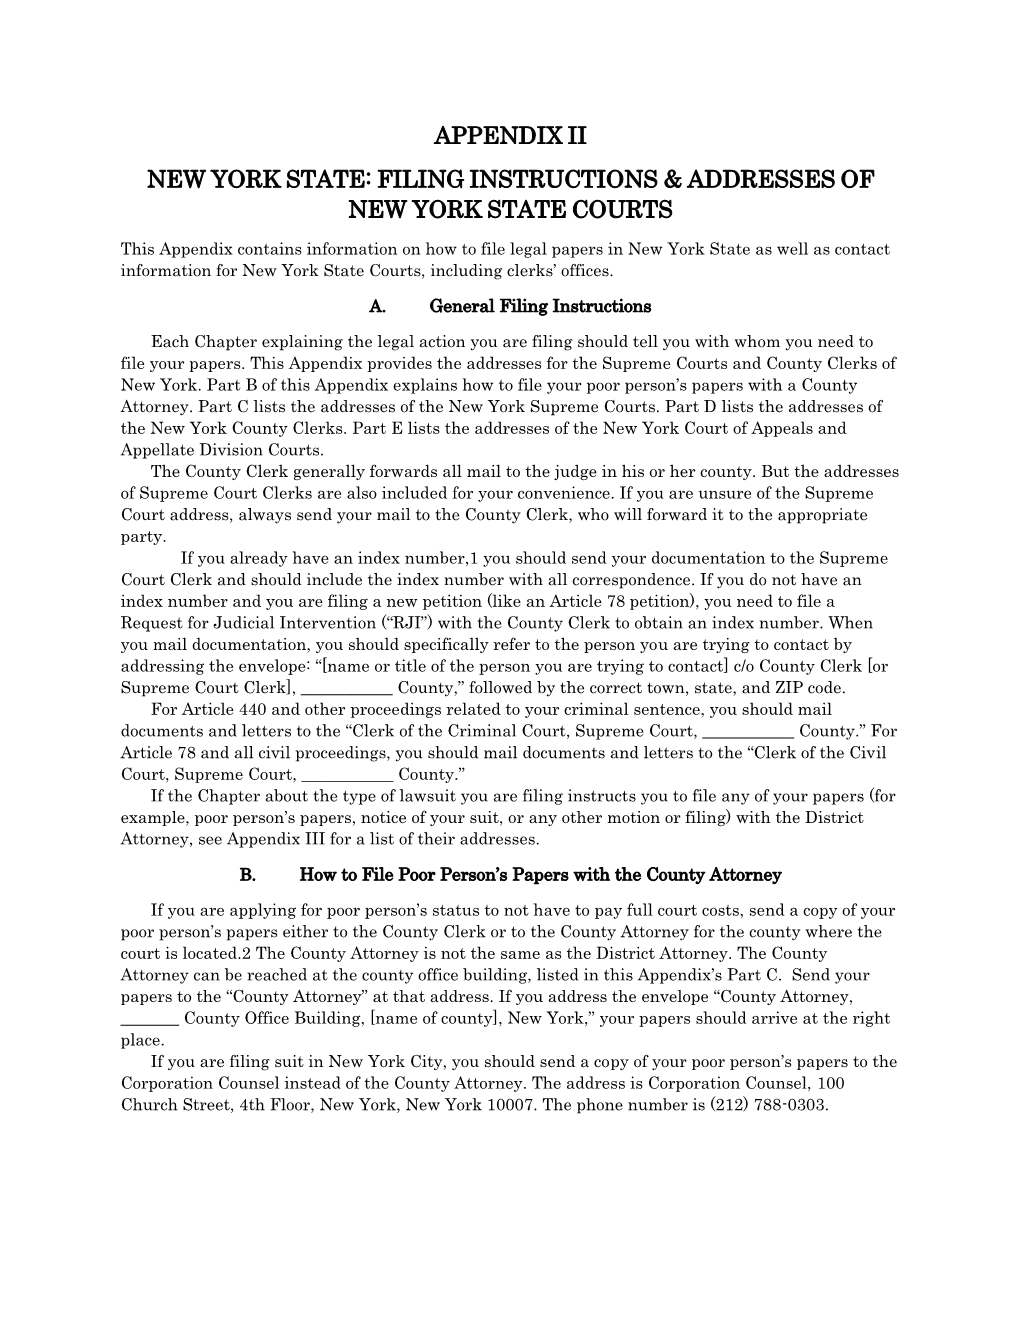 Filing Instructions & Addresses of New York